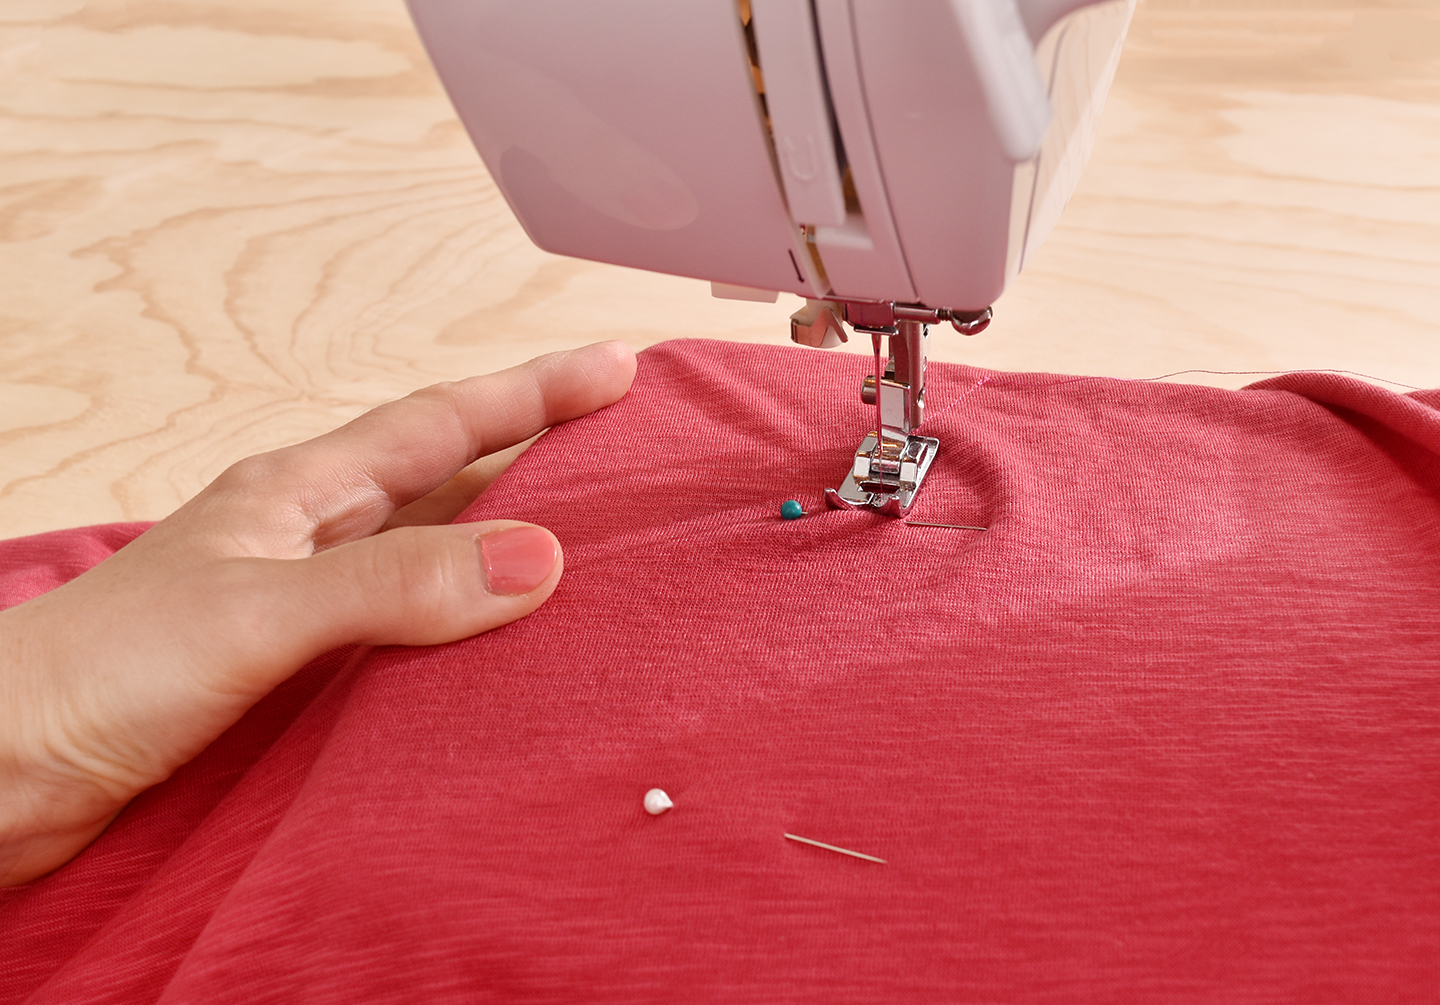 DIY Shirt: 5 Minute Summer Sewing Tutorial /// By Design Fixation #diy_shirt #sewing #tutorial 